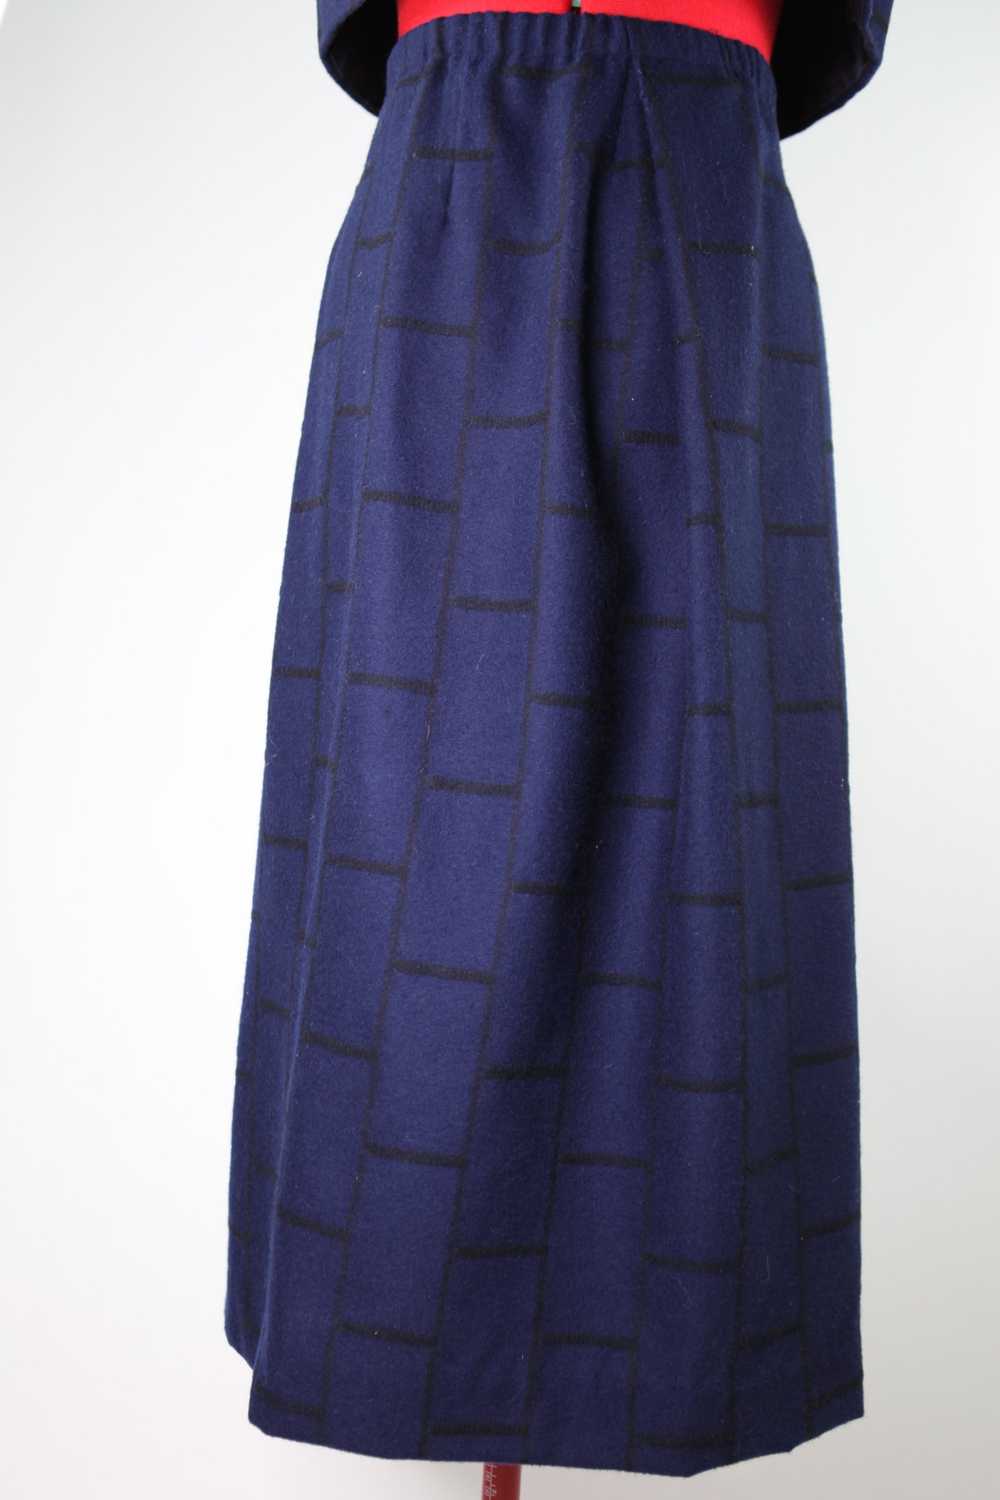 60s Skirt/Vest Set - image 5